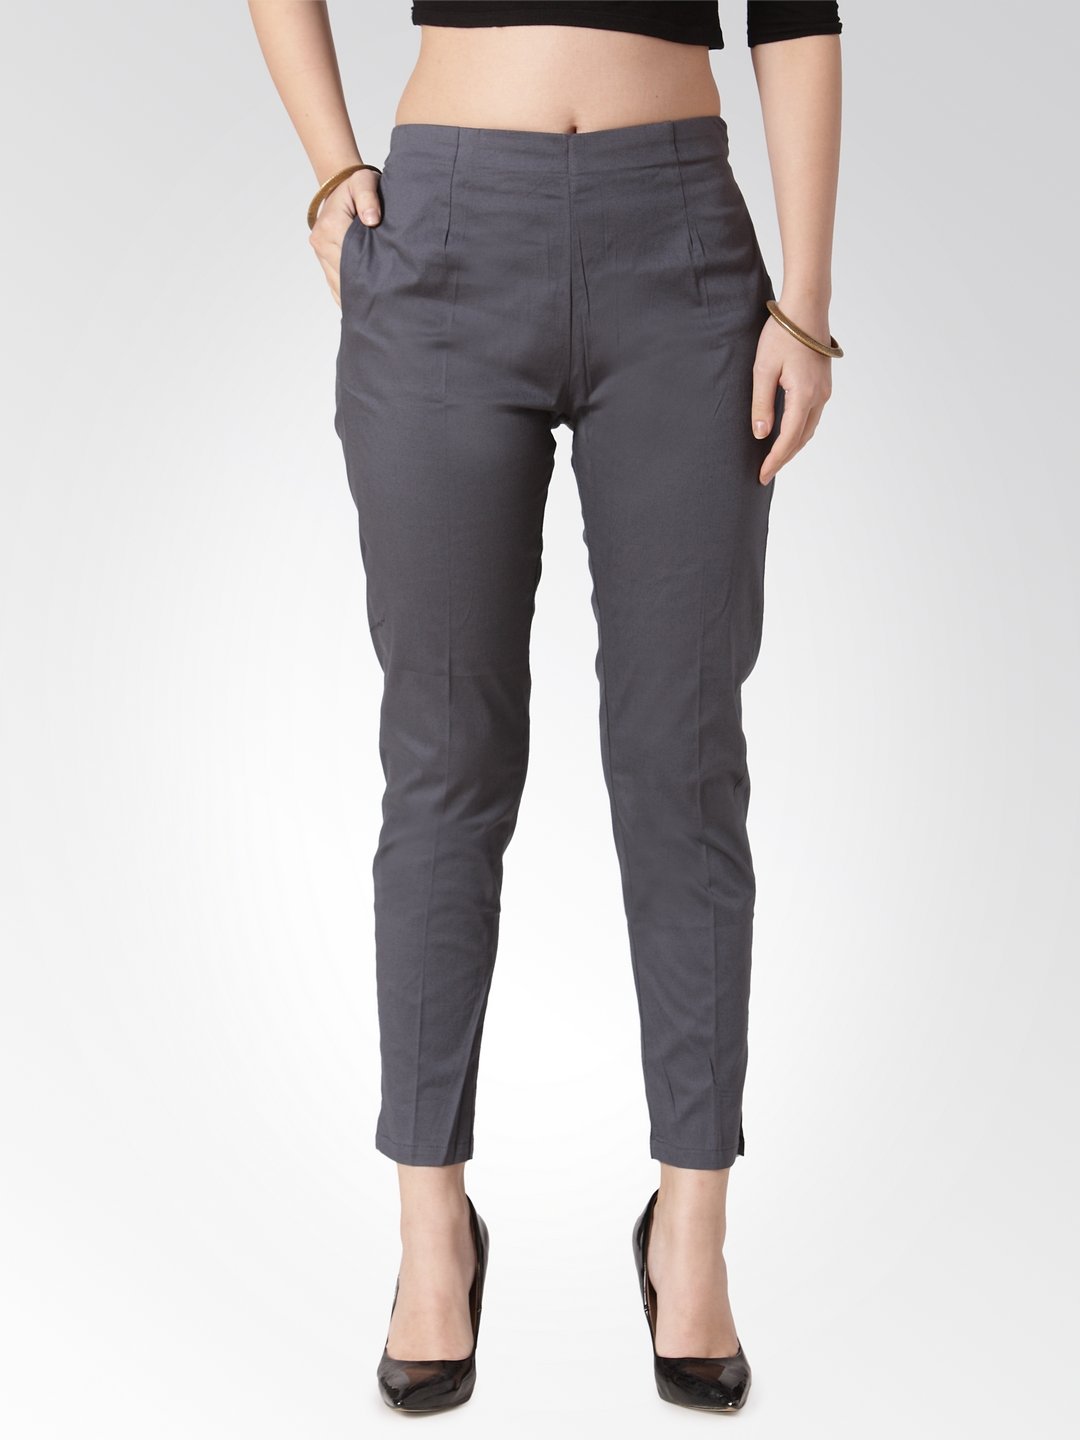 Women's Grey Smart Slim Fit Solid Regular Trousers - Jompers